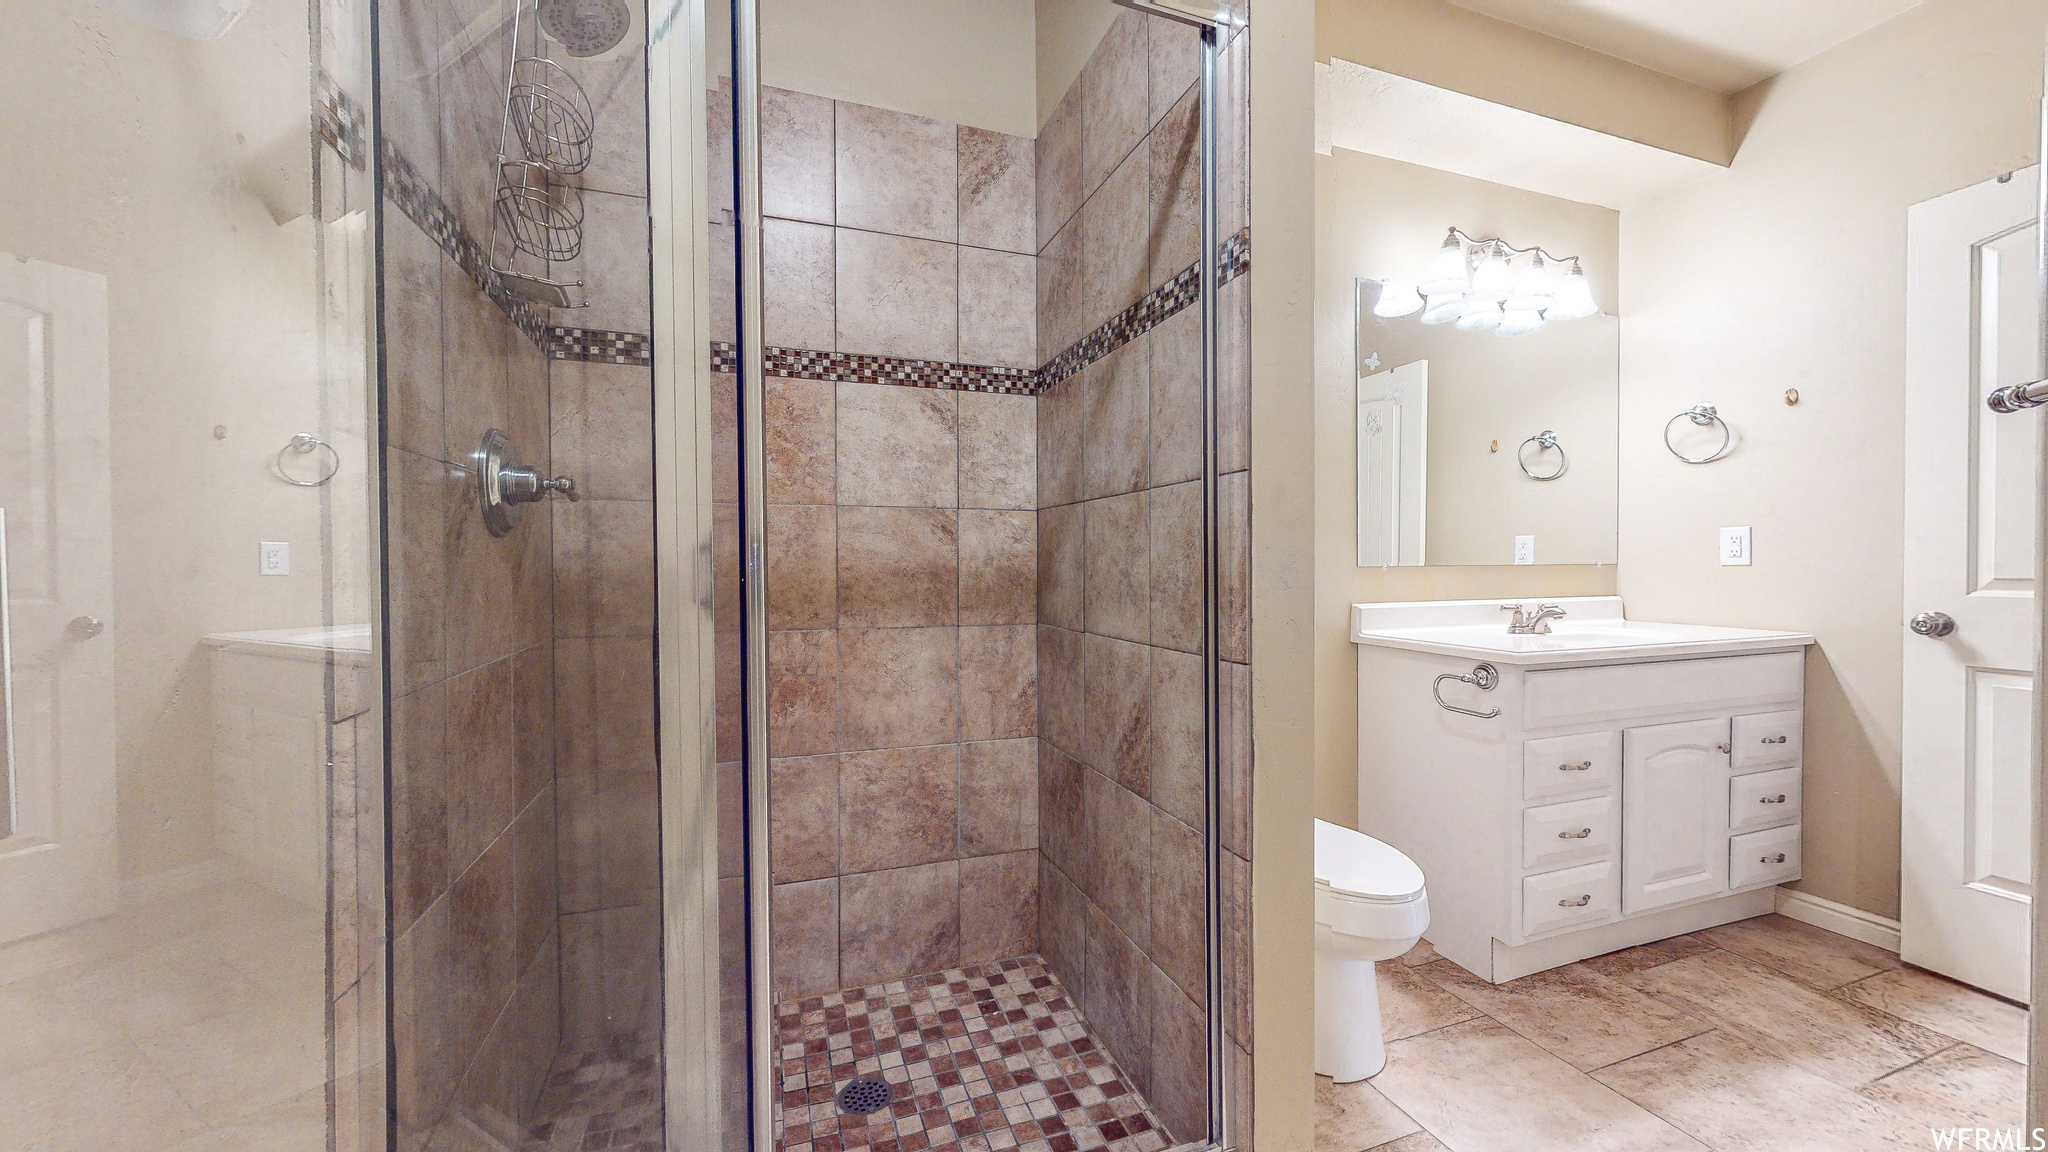 Basement bathroom with tile flooring, a shower with door, toilet, and vanity